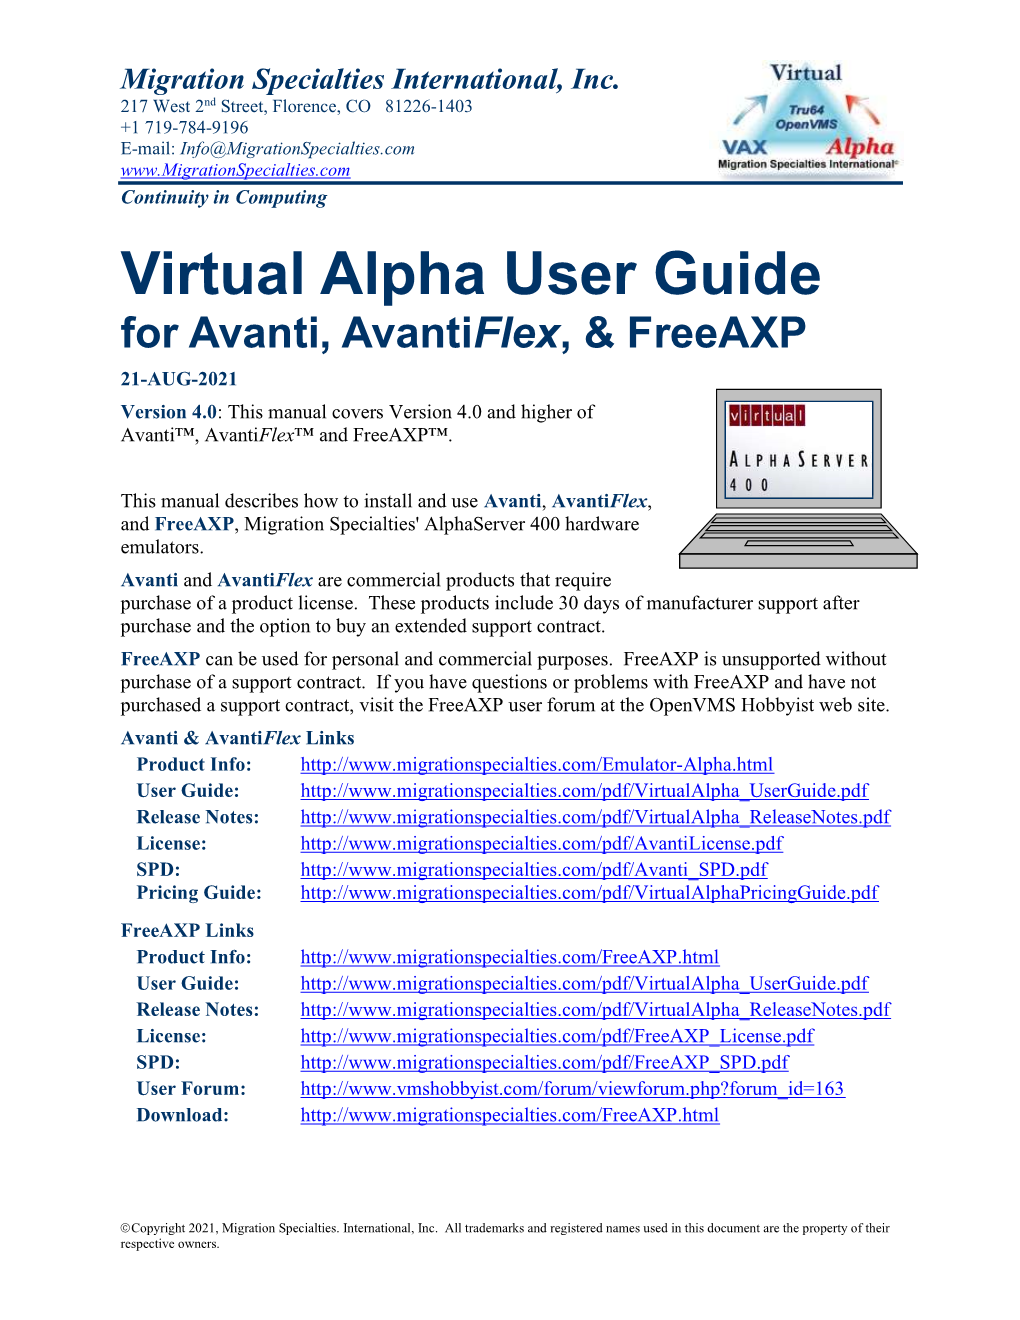 Virtual Alpha User Guide for Avanti, Avantiflex, & Freeaxp 21-AUG-2021 Version 4.0: This Manual Covers Version 4.0 and Higher of Avanti™, Avantiflex™ and Freeaxp™